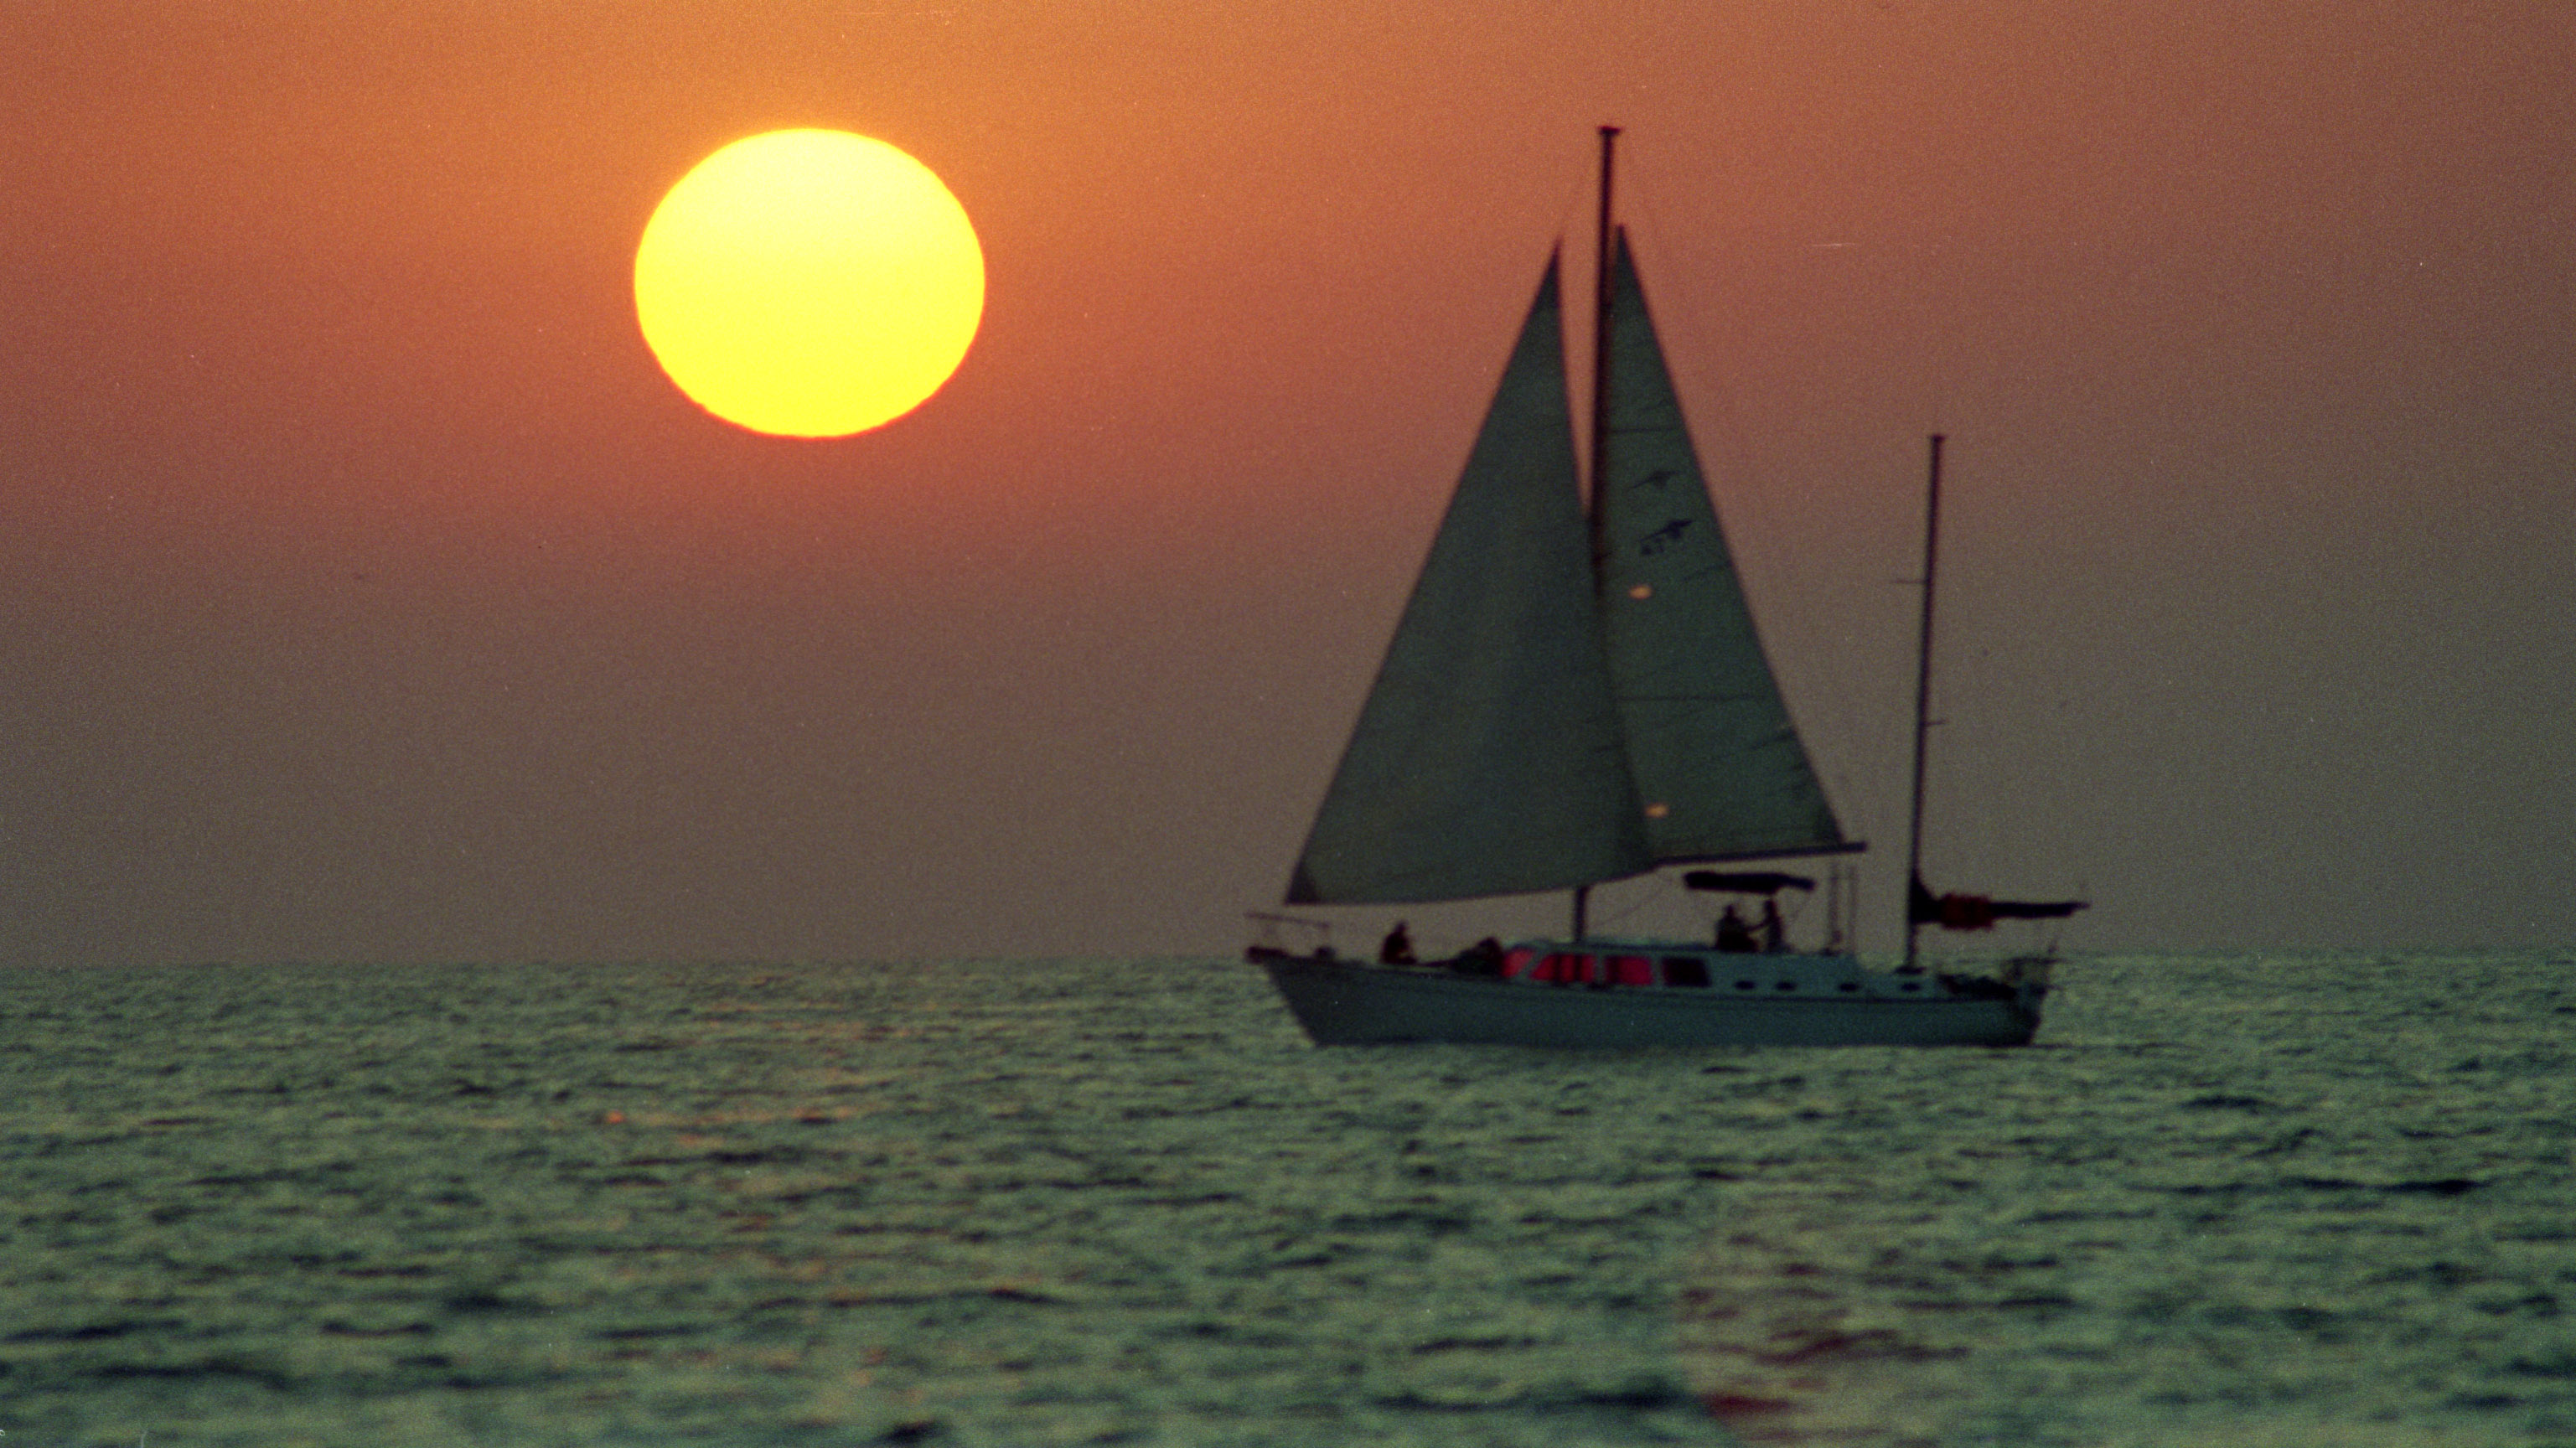 John Harvey Tag Mexico Sunset Boat Sailboat Orange Sky Raw Image